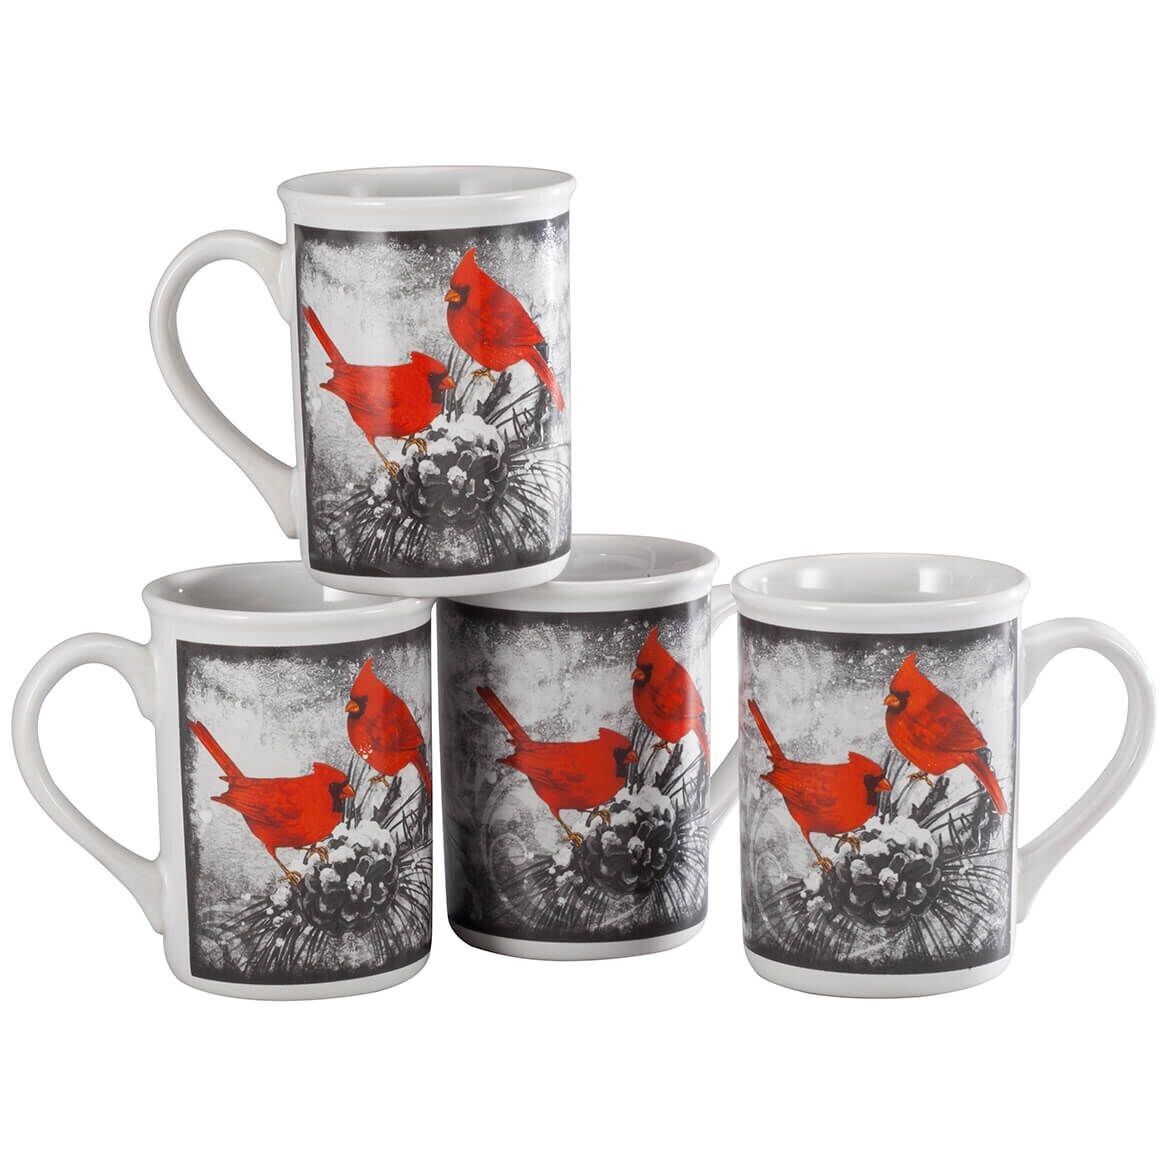  Cardinal Coffee Mugs By William Roberts Set Of 4 